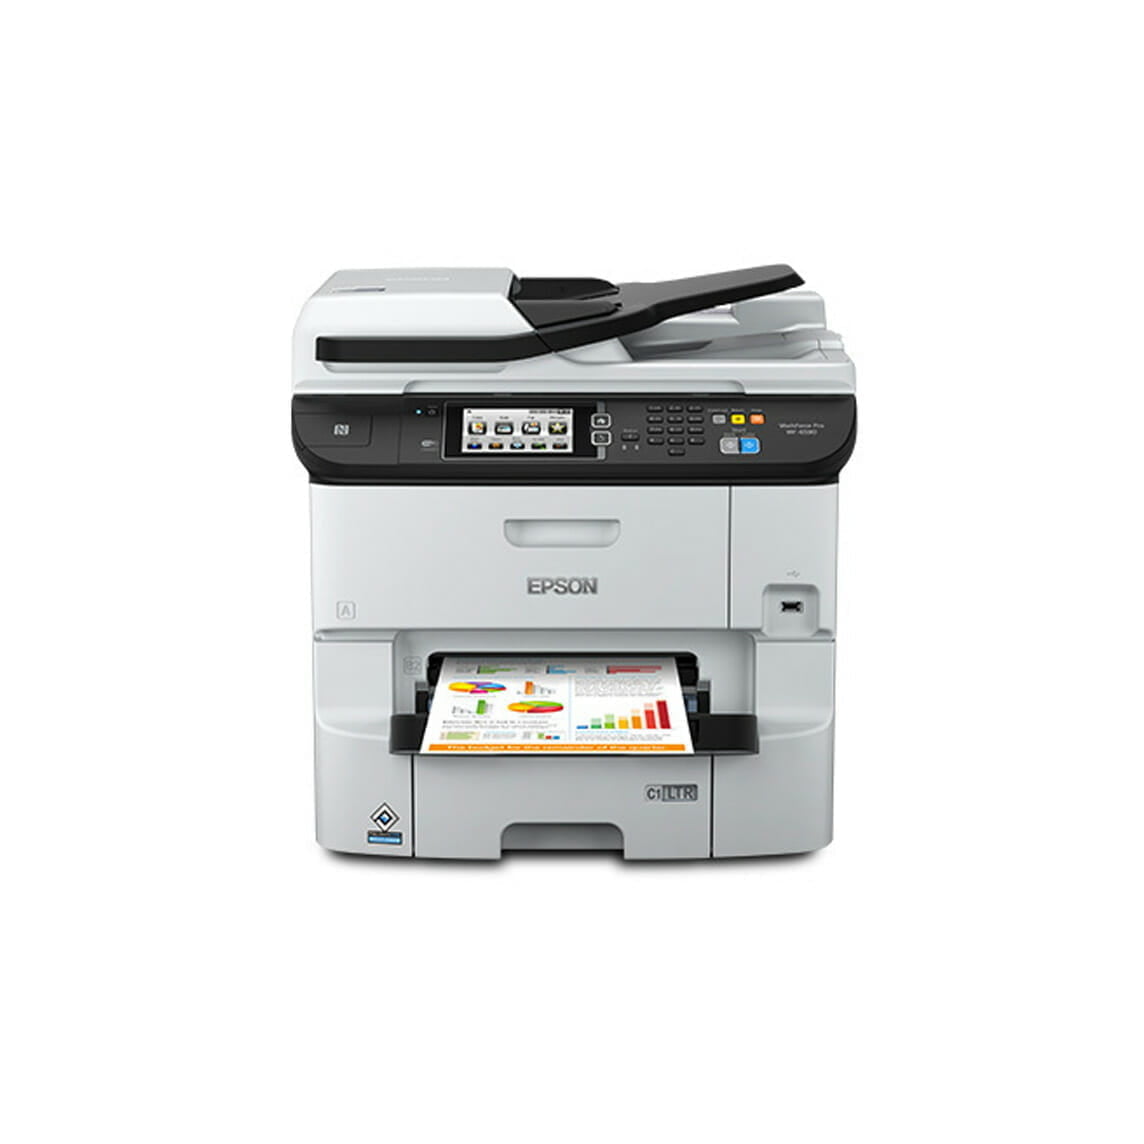 Epson Impresora Workforce Pro Wf 6090 Compudemano 4651